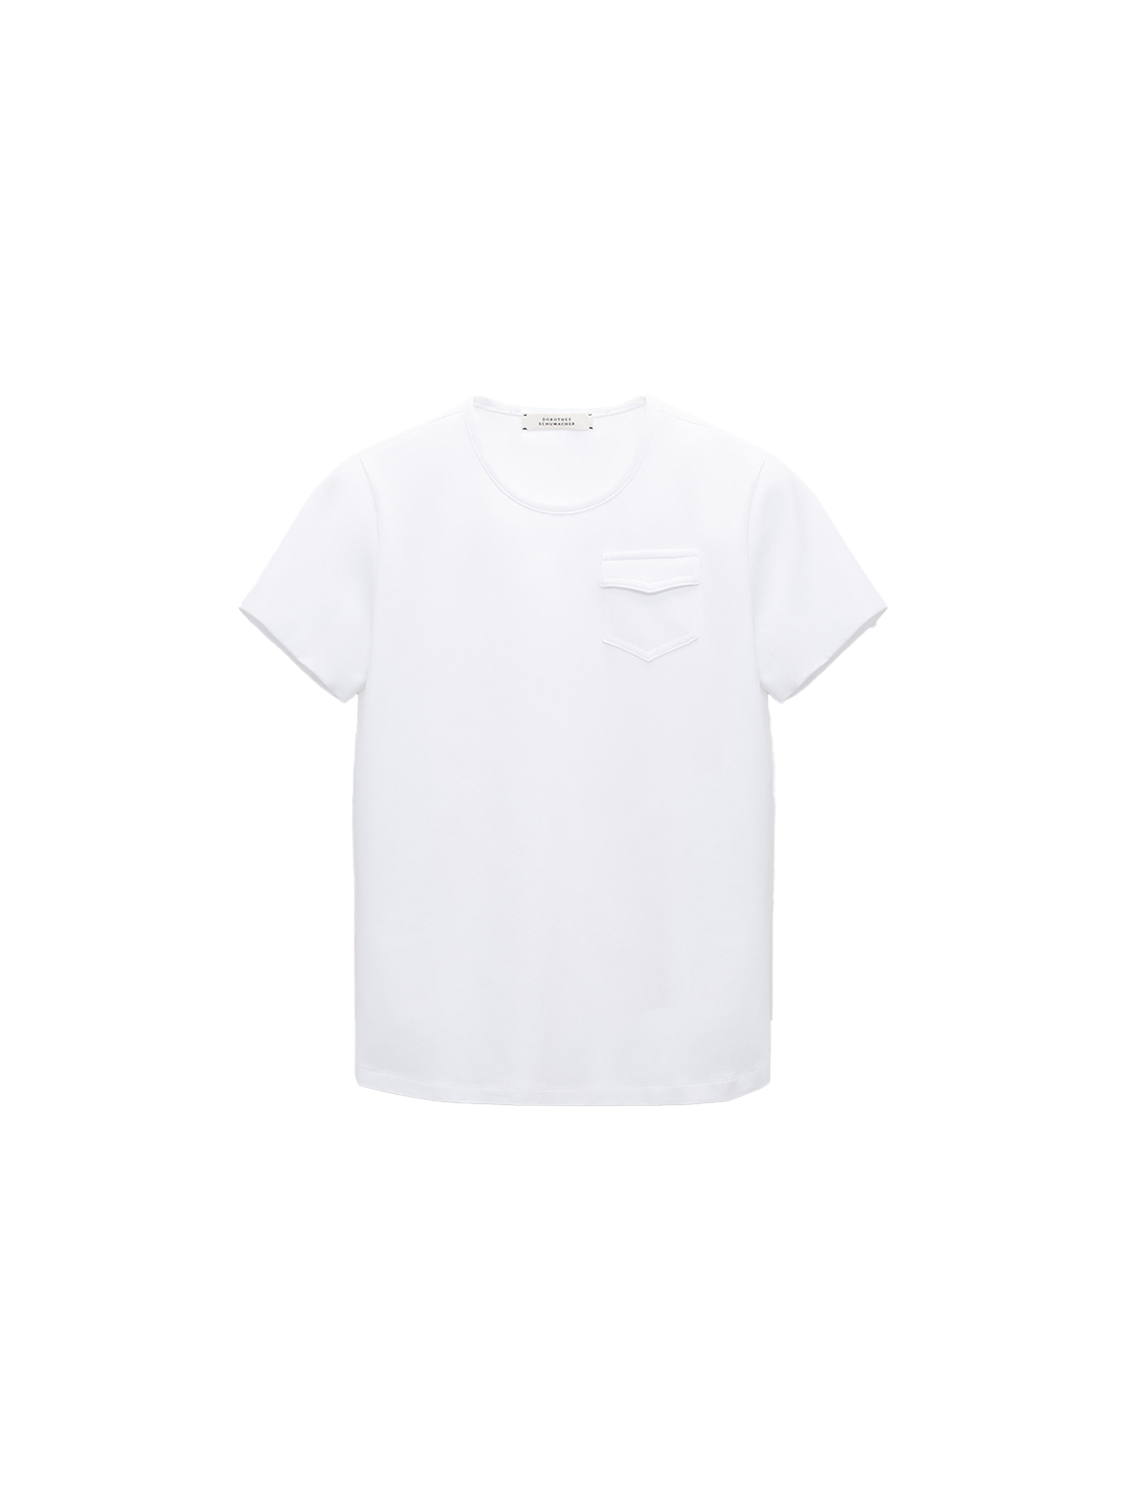 Dorothee Schumacher All Time Favorite – Stretchiges Baumwoll-Shirt   blanco XS